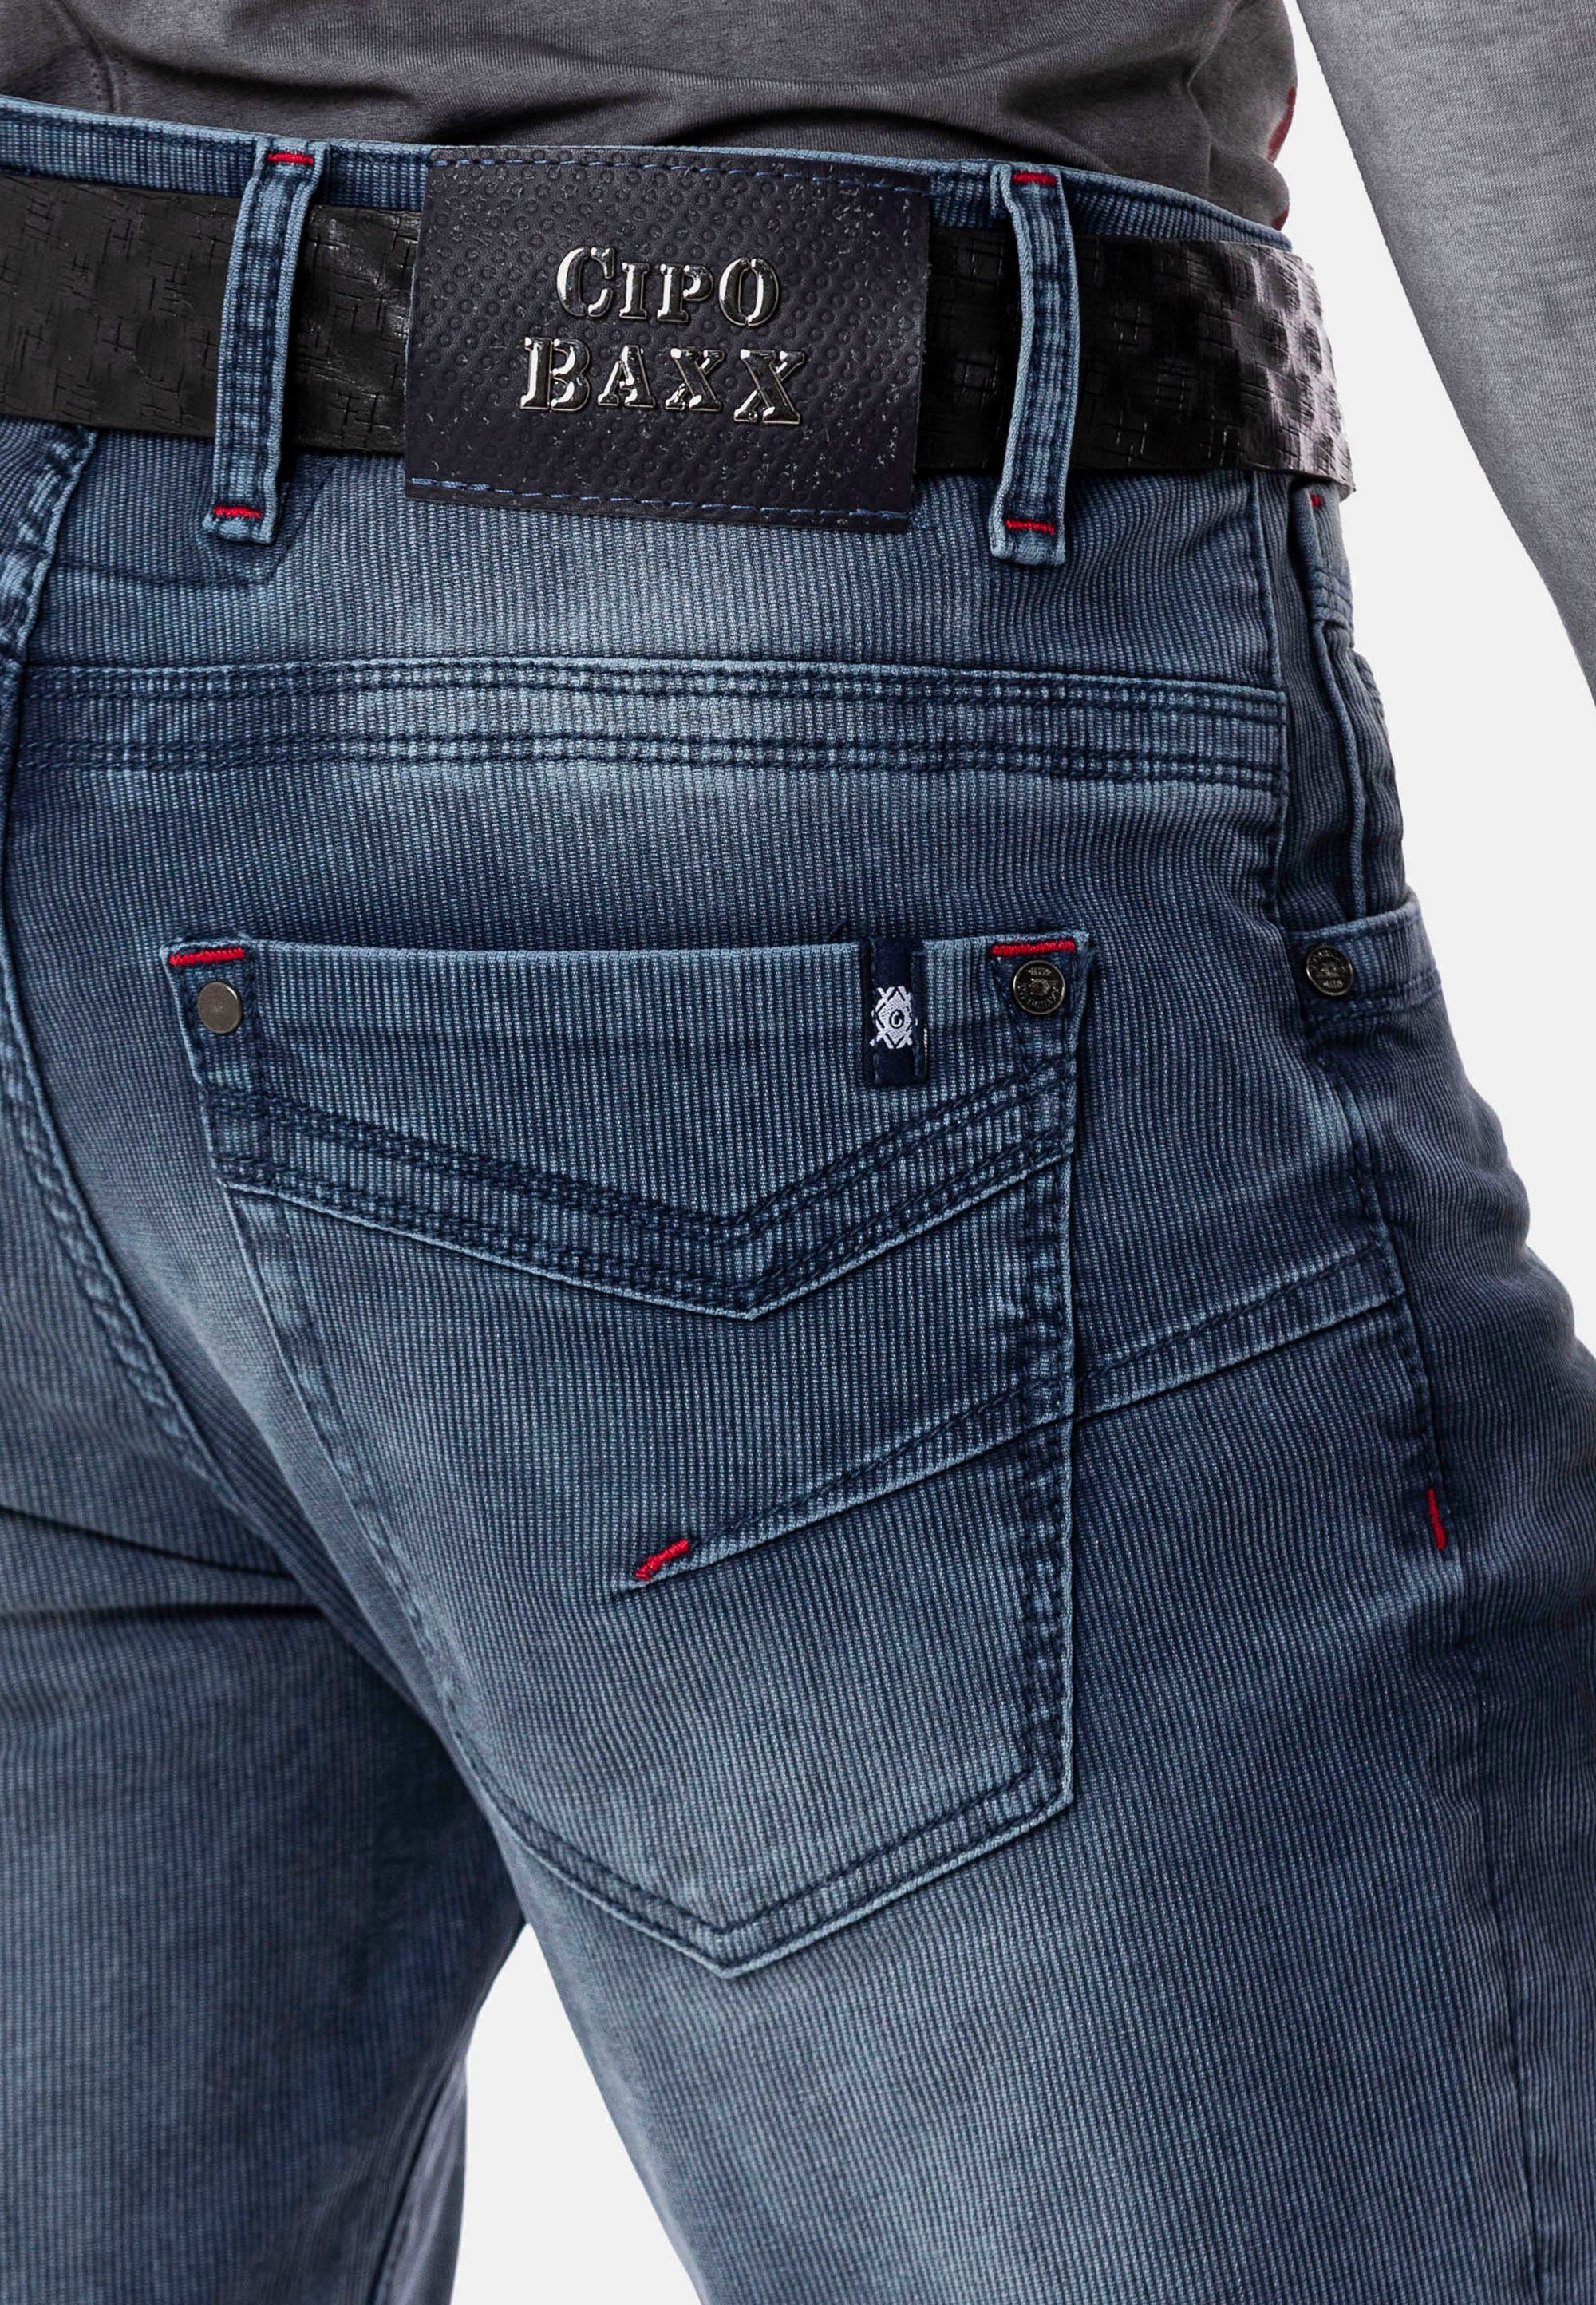 Cipo & Baxx Straight-Jeans in Cord-Design stilvollem blau